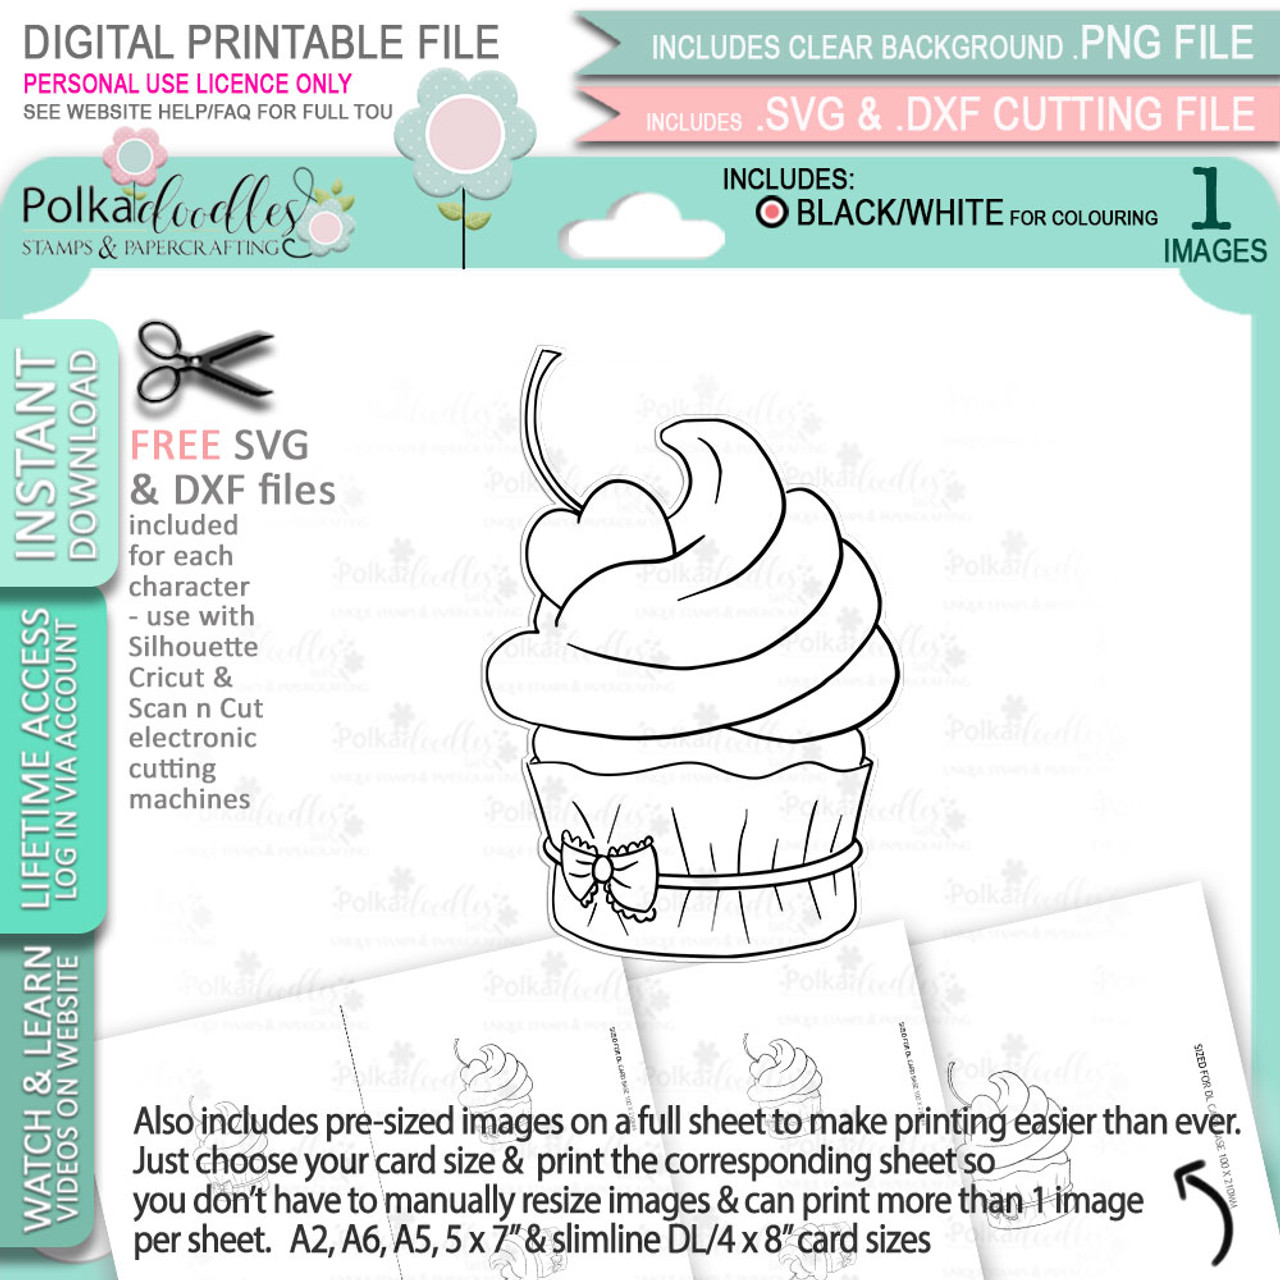 Printable Cupcake Stickers  Print and Cut Kawaii Stickers